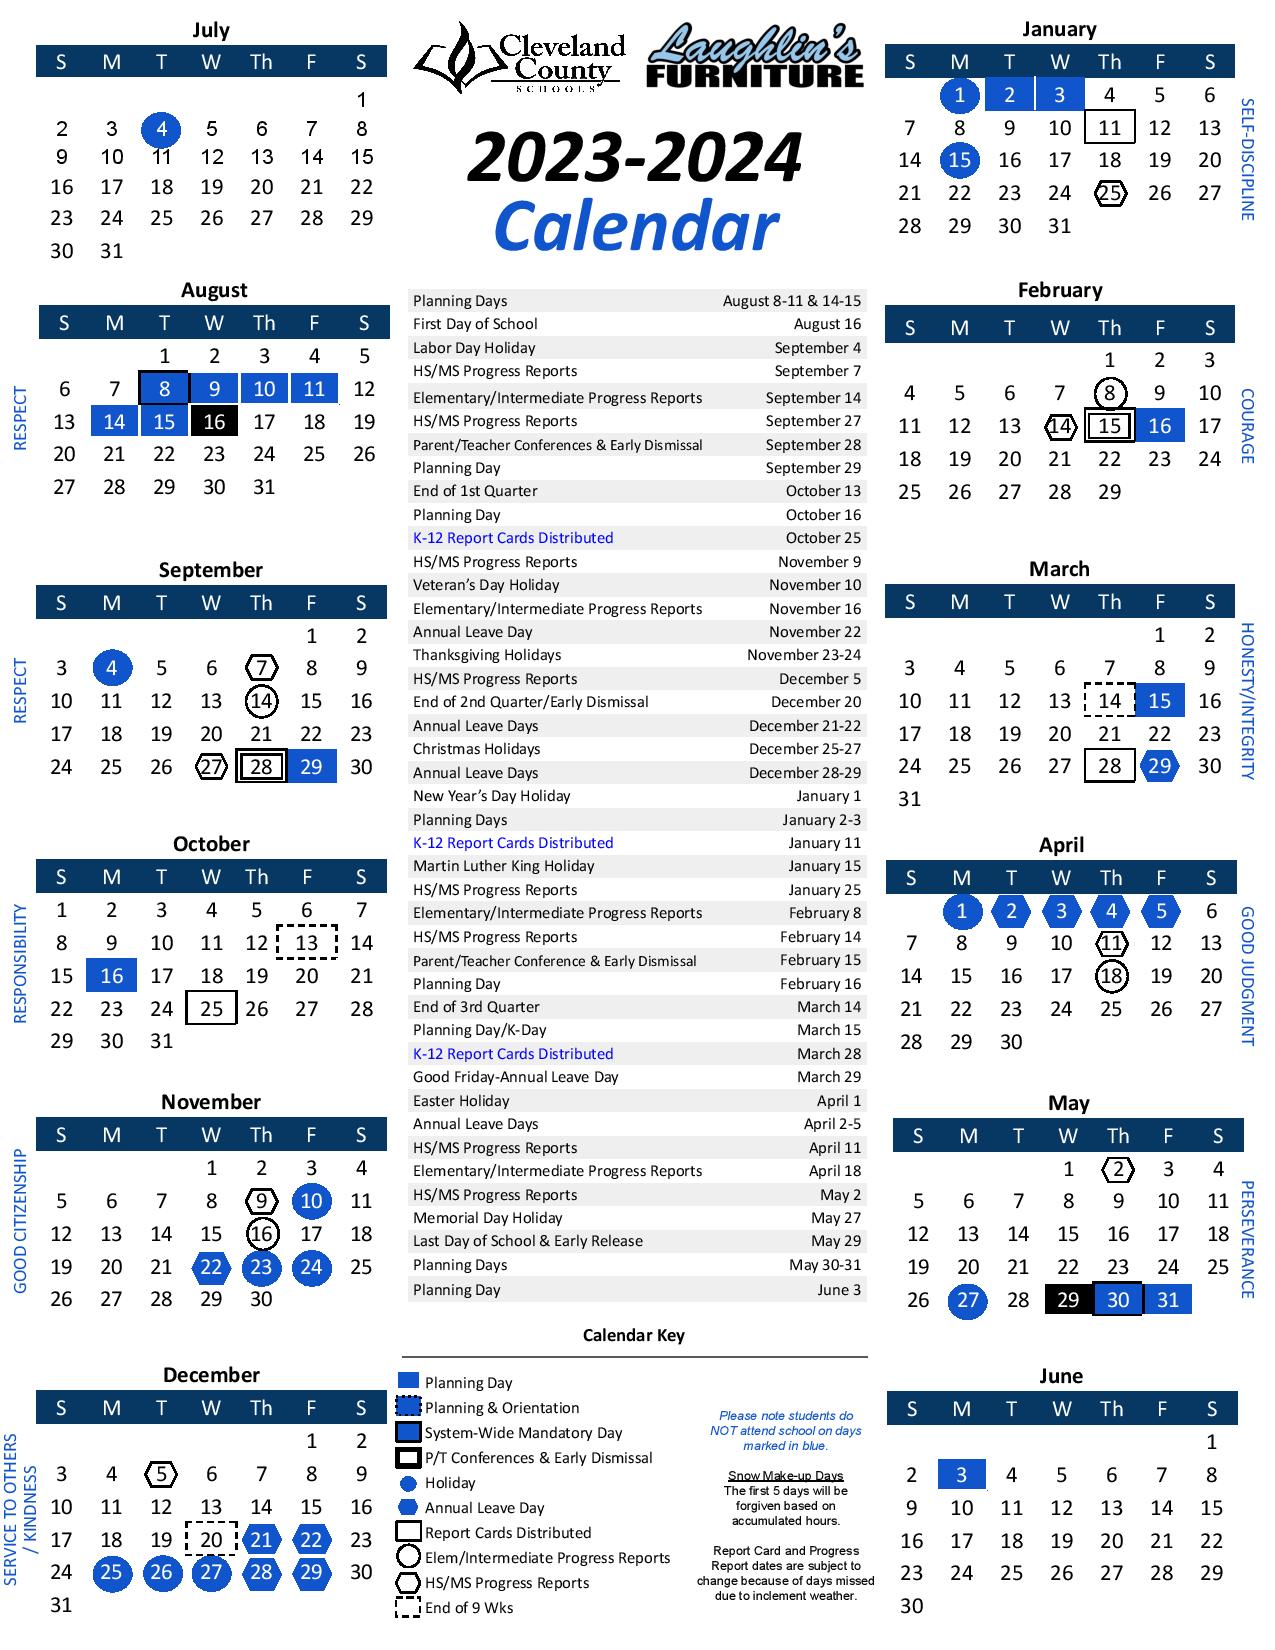 Cleveland County Schools Calendar 20232024 in PDF